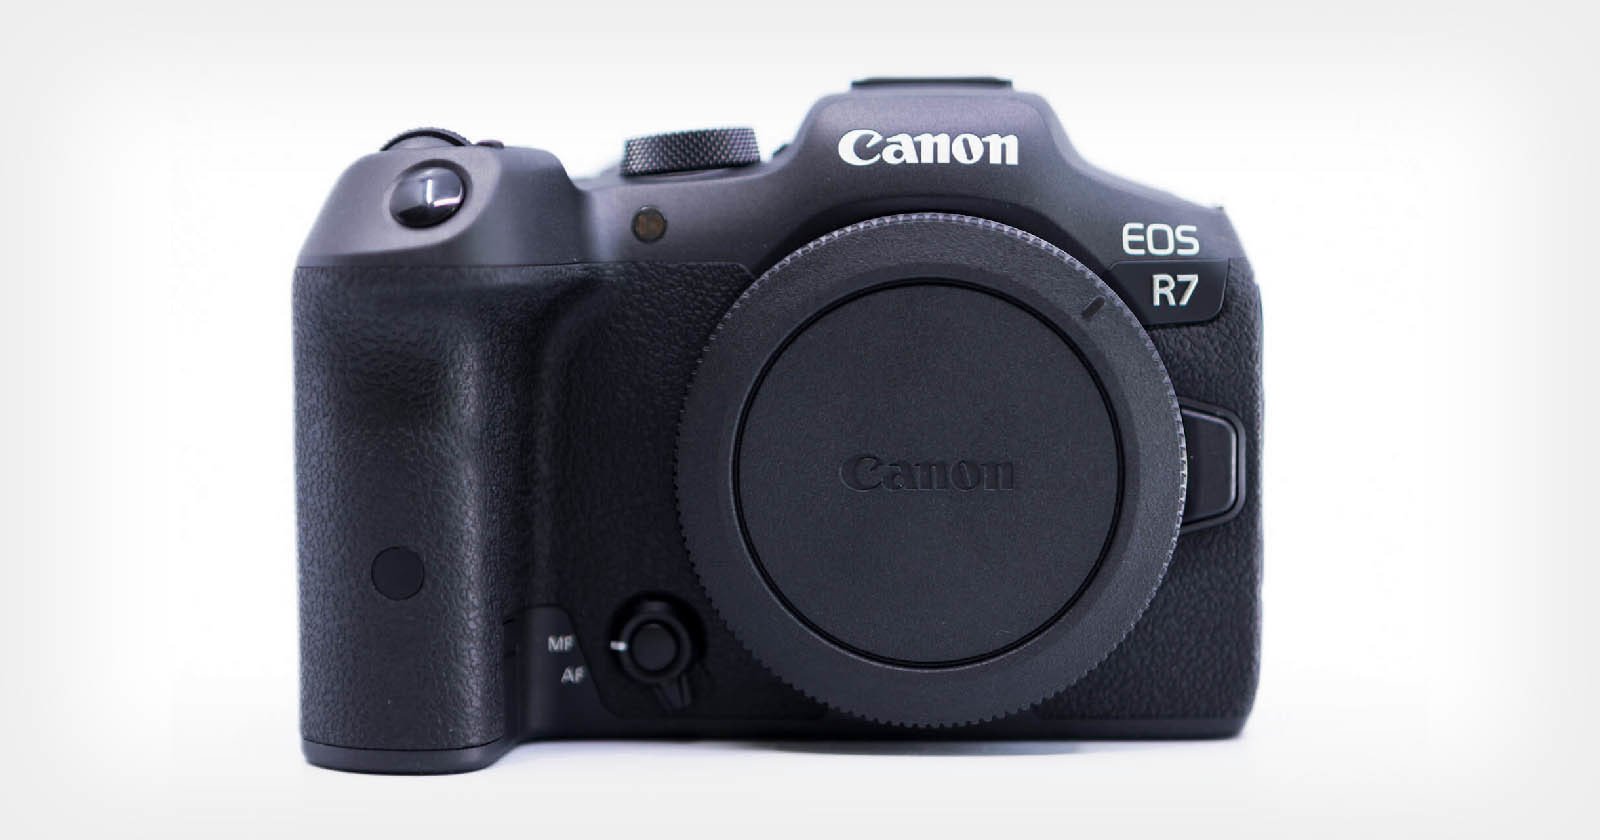  camera canon mirrorless eos 